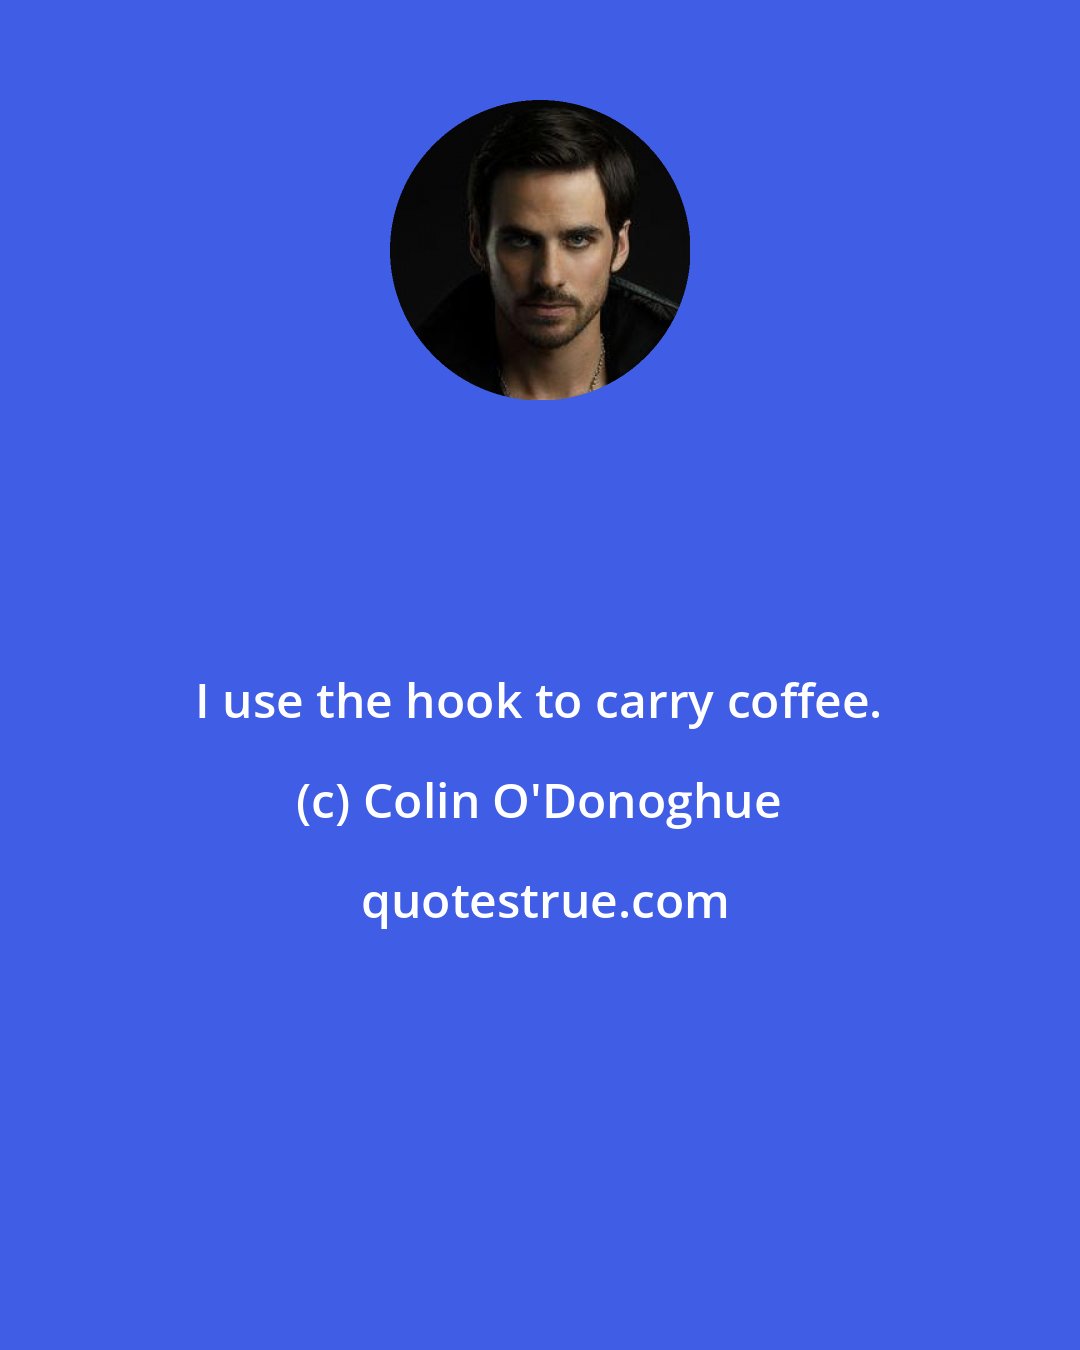 Colin O'Donoghue: I use the hook to carry coffee.